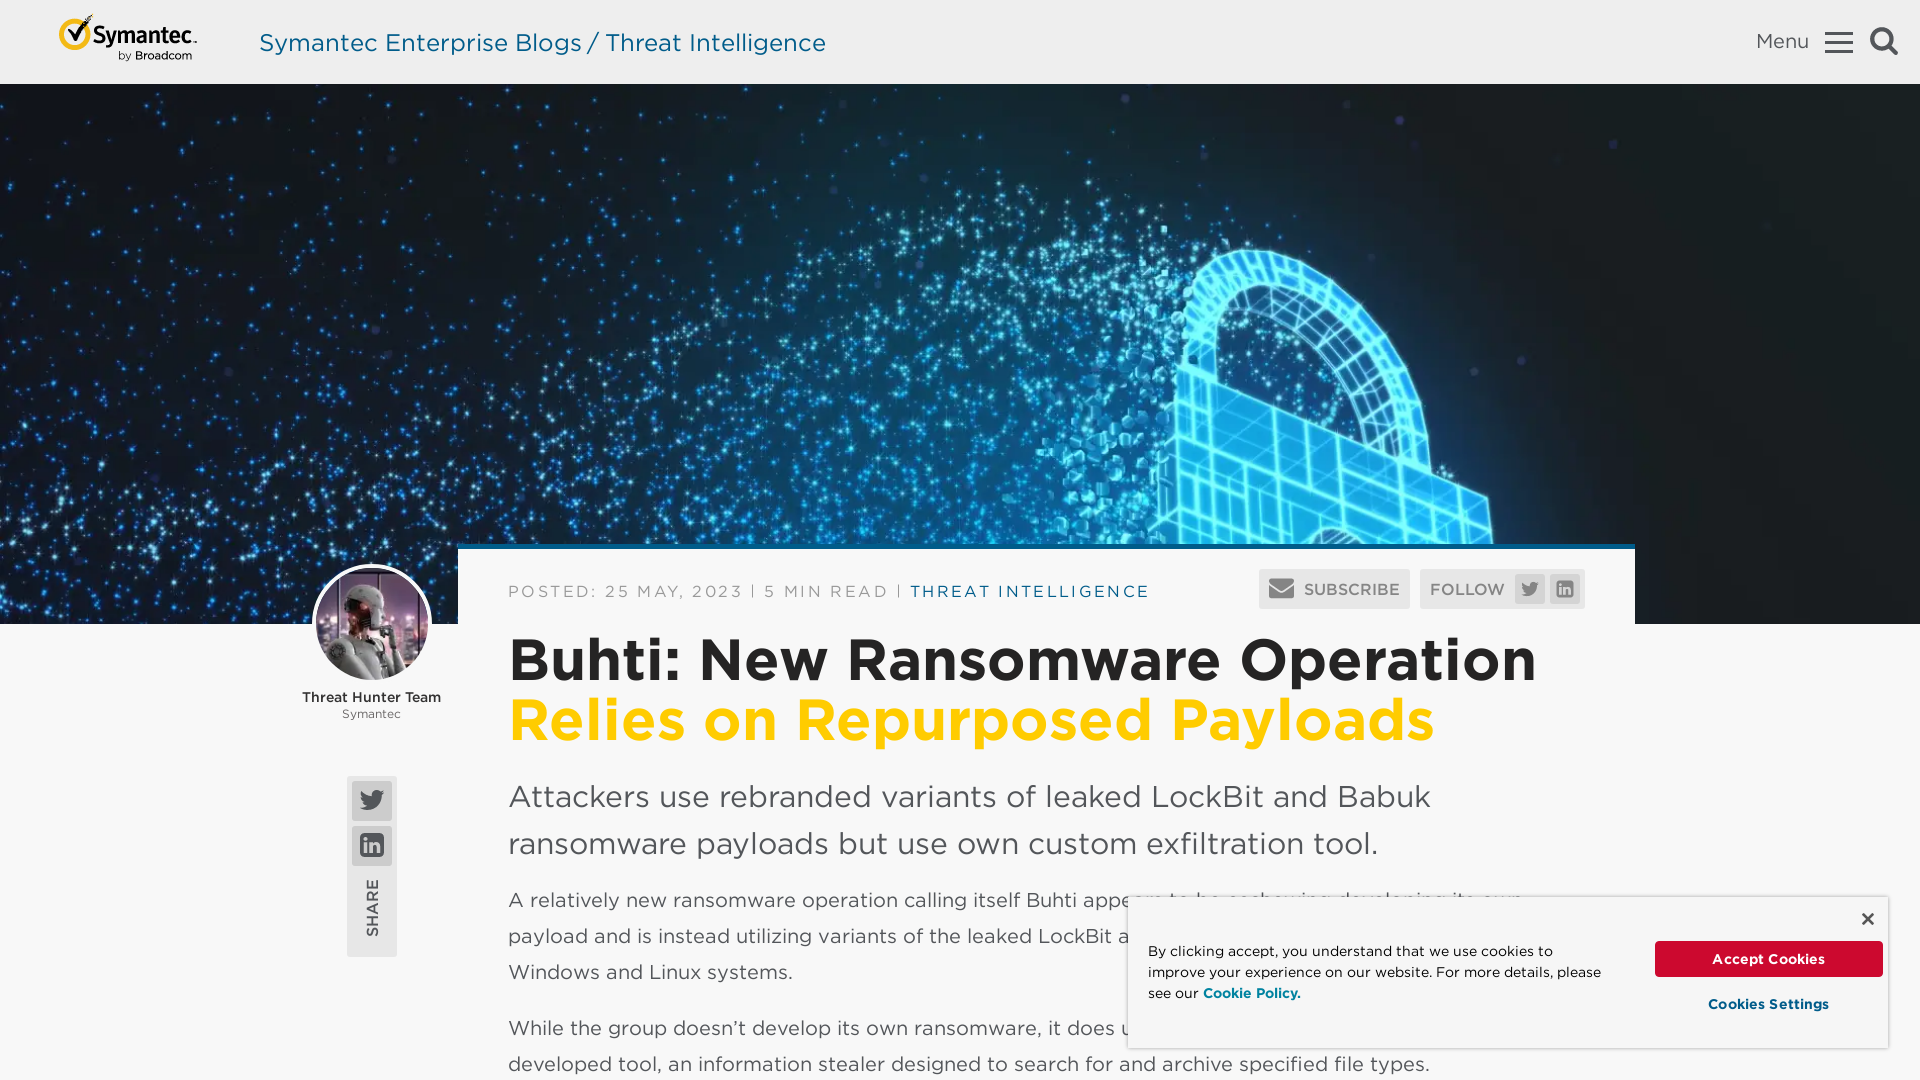 Buhti: New Ransomware Operation Relies on Repurposed Payloads | Symantec Enterprise Blogs